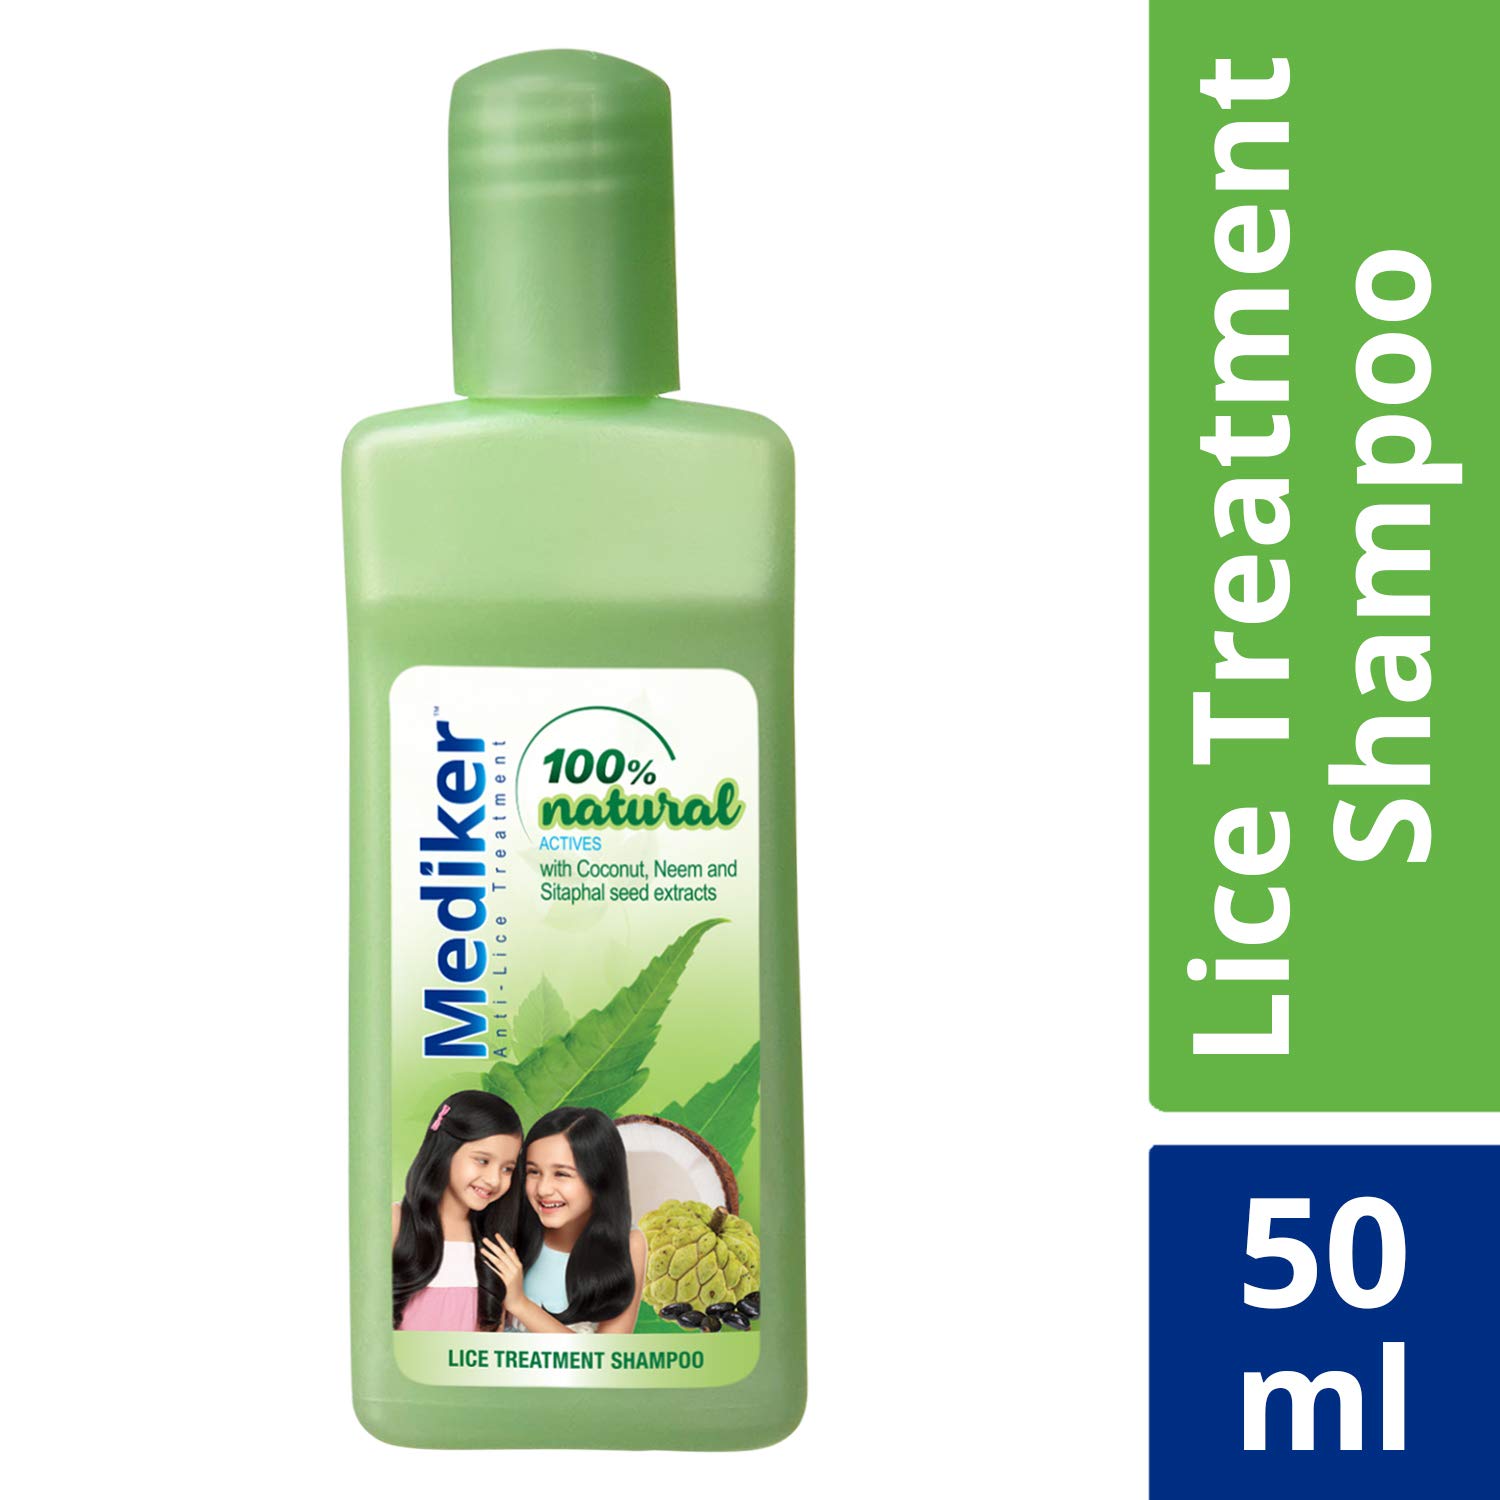 Mediker Lice Treatment Shampoo